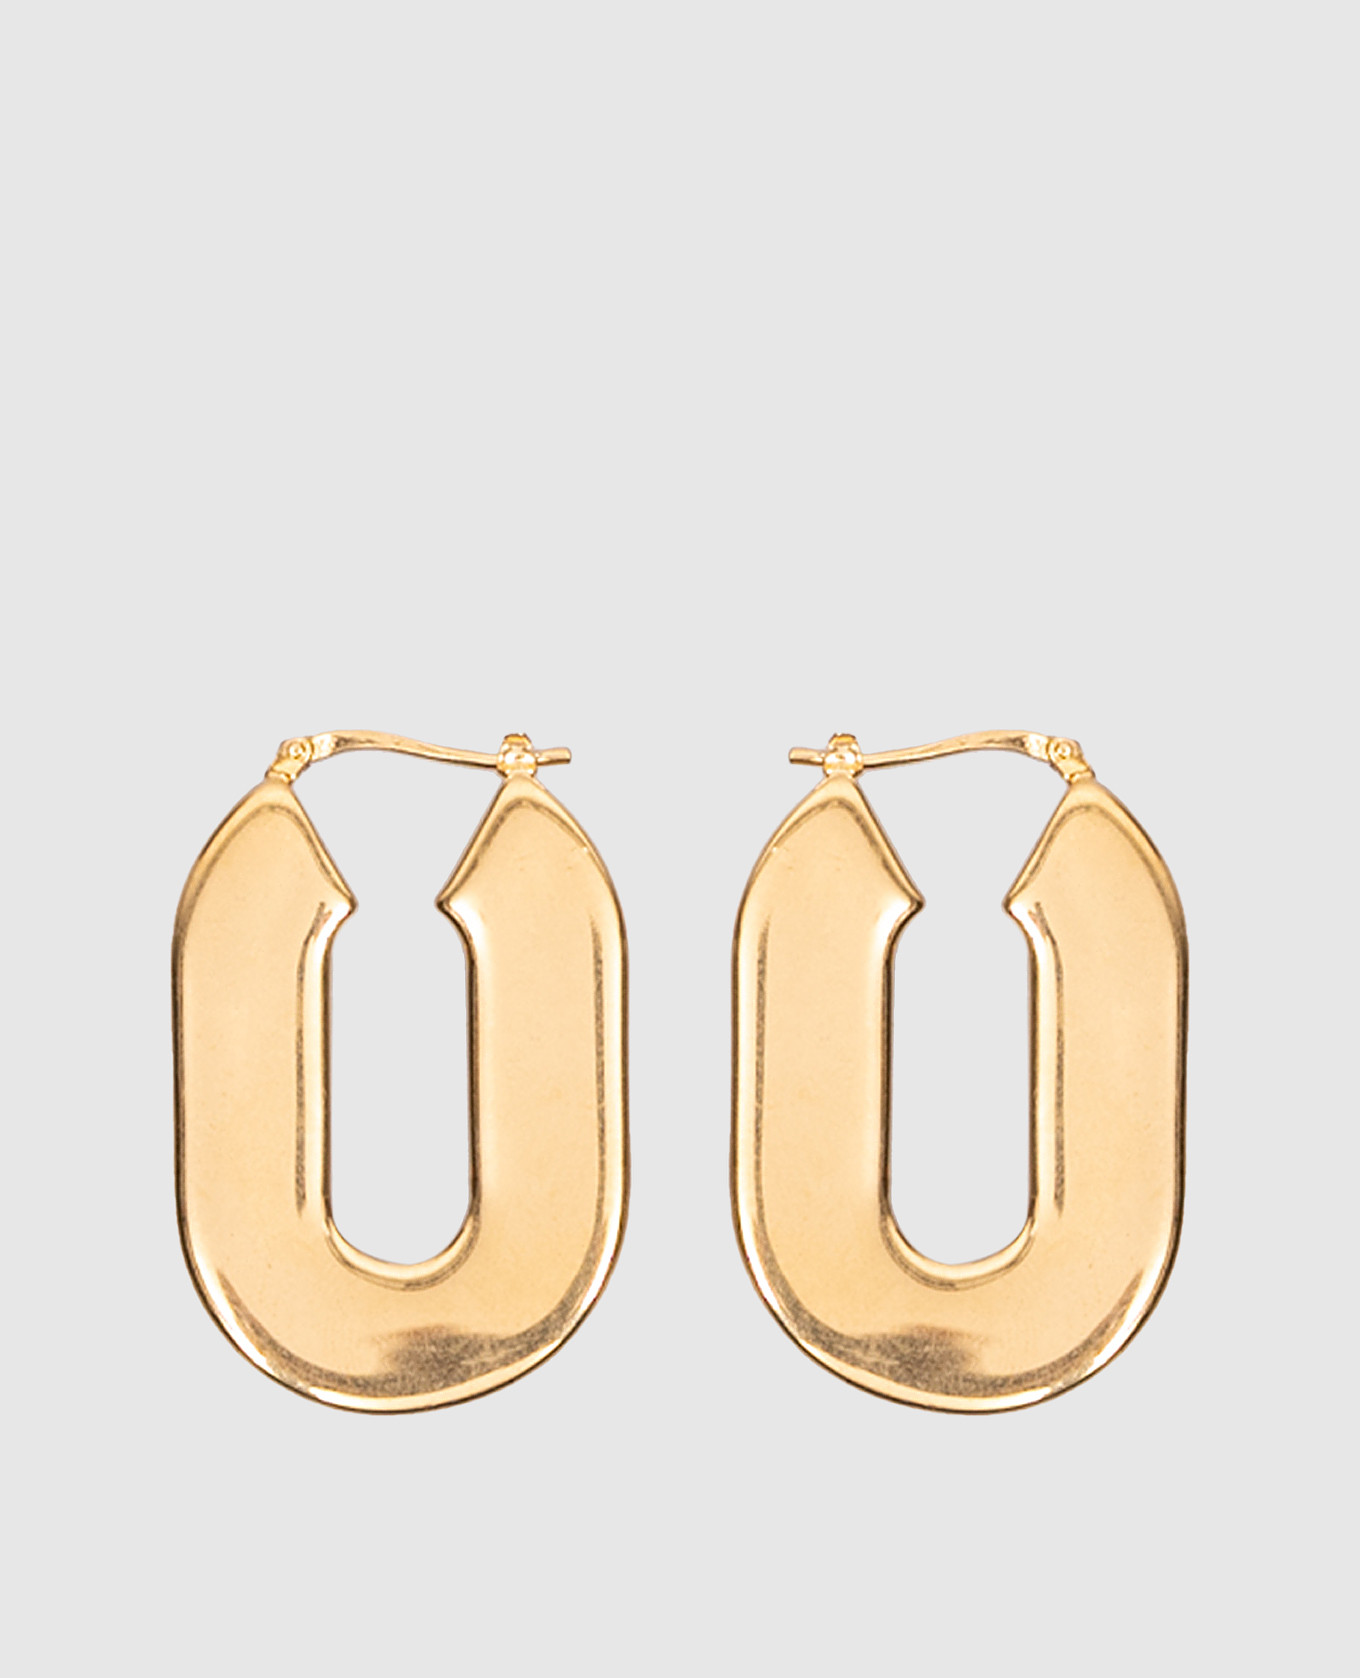 Golden earrings with logo engraving